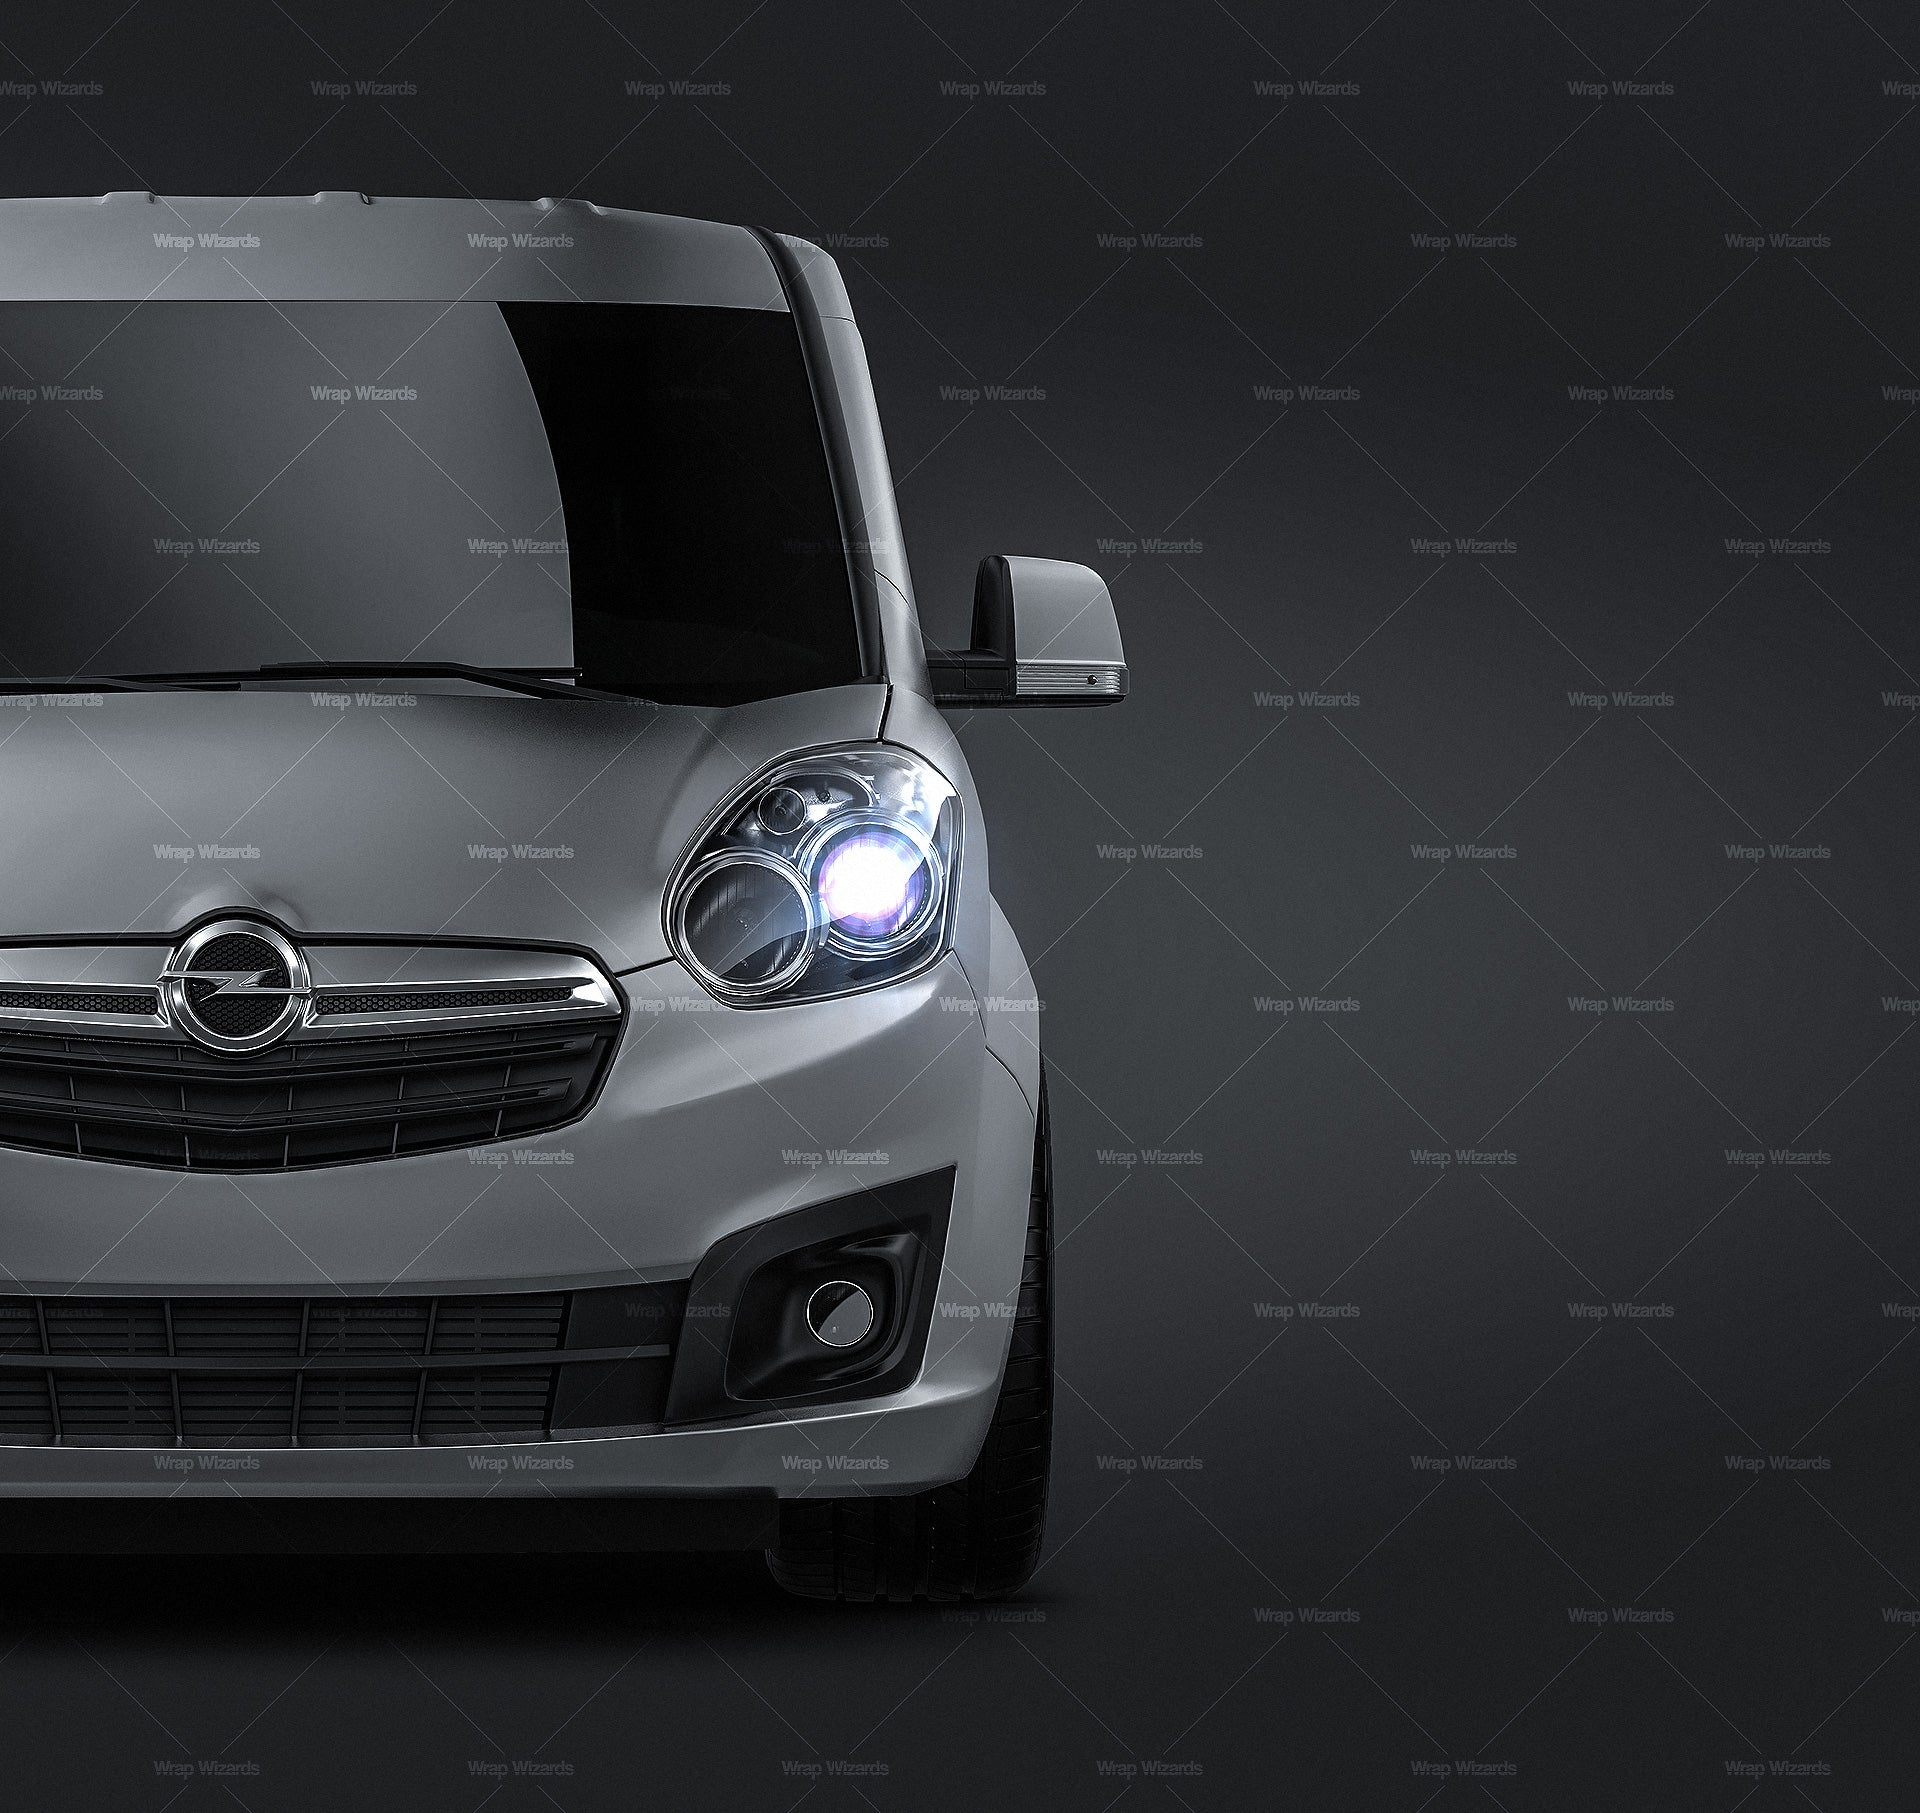 Opel Combo SWB Cargo 2015 satin matt finish - all sides Car Mockup Template.psd